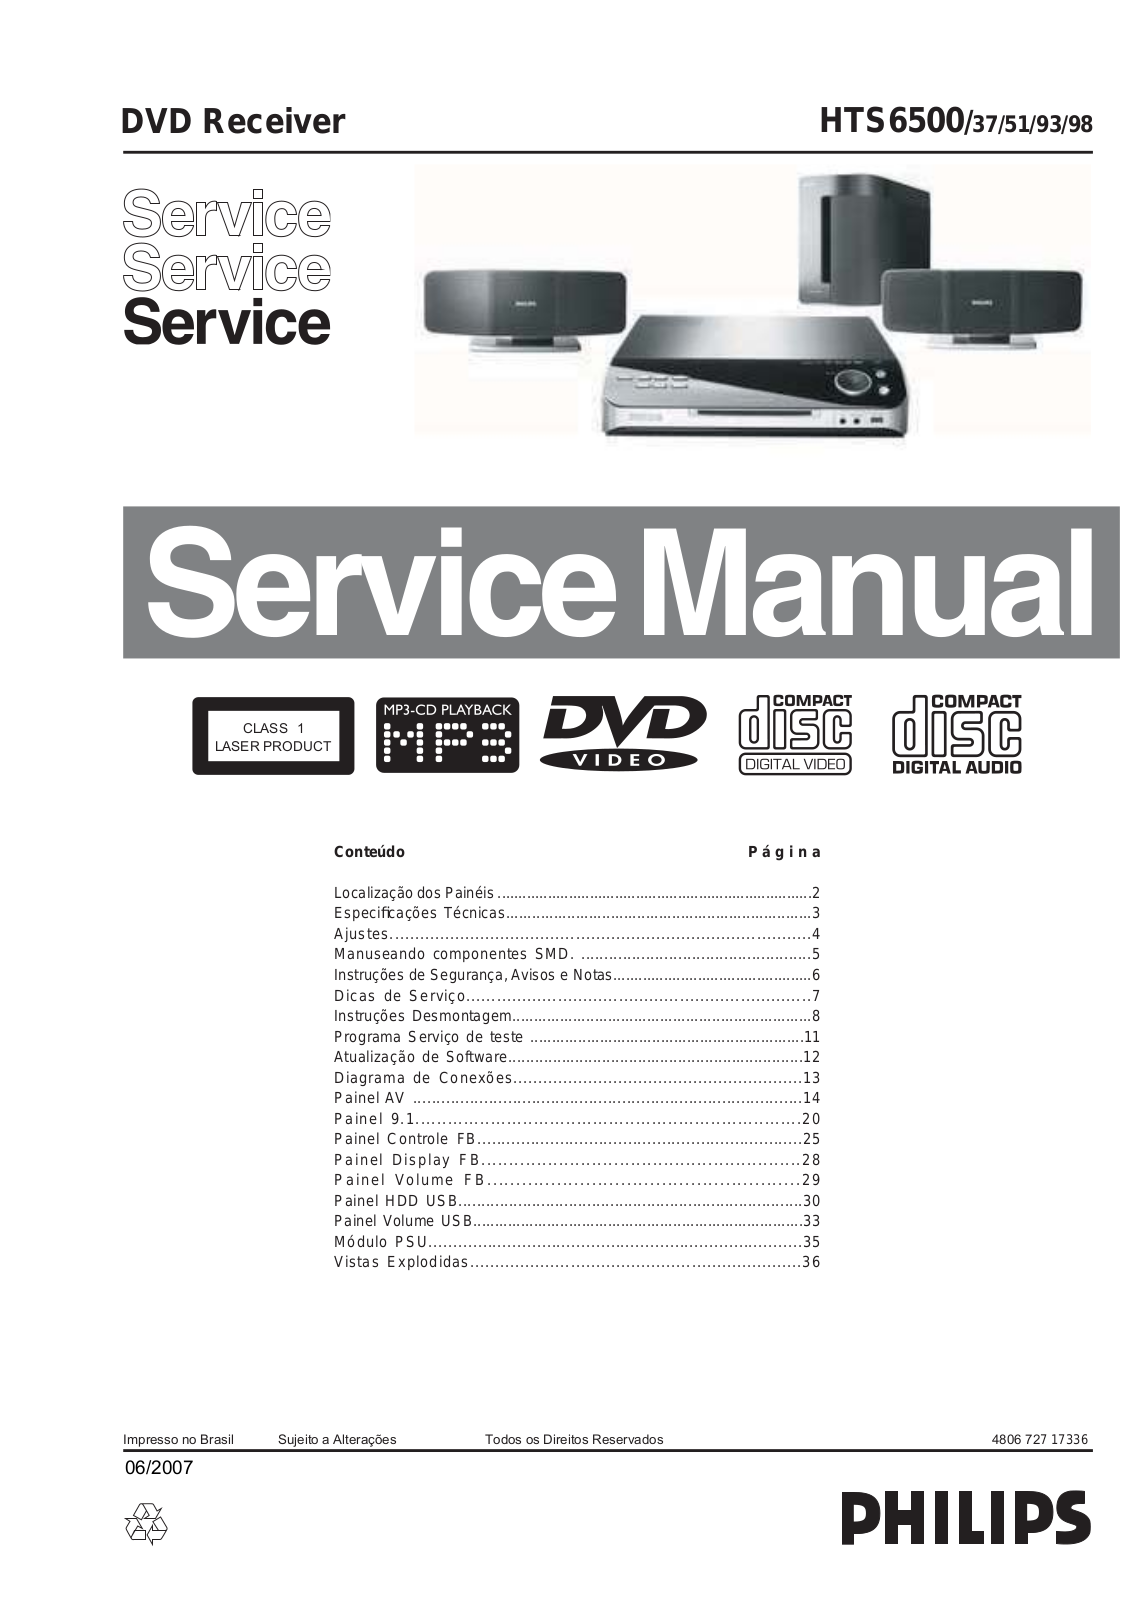 philips HTS6500-37, HTS6500-51, HTS6500-93, HTS6500-98 Service Manual